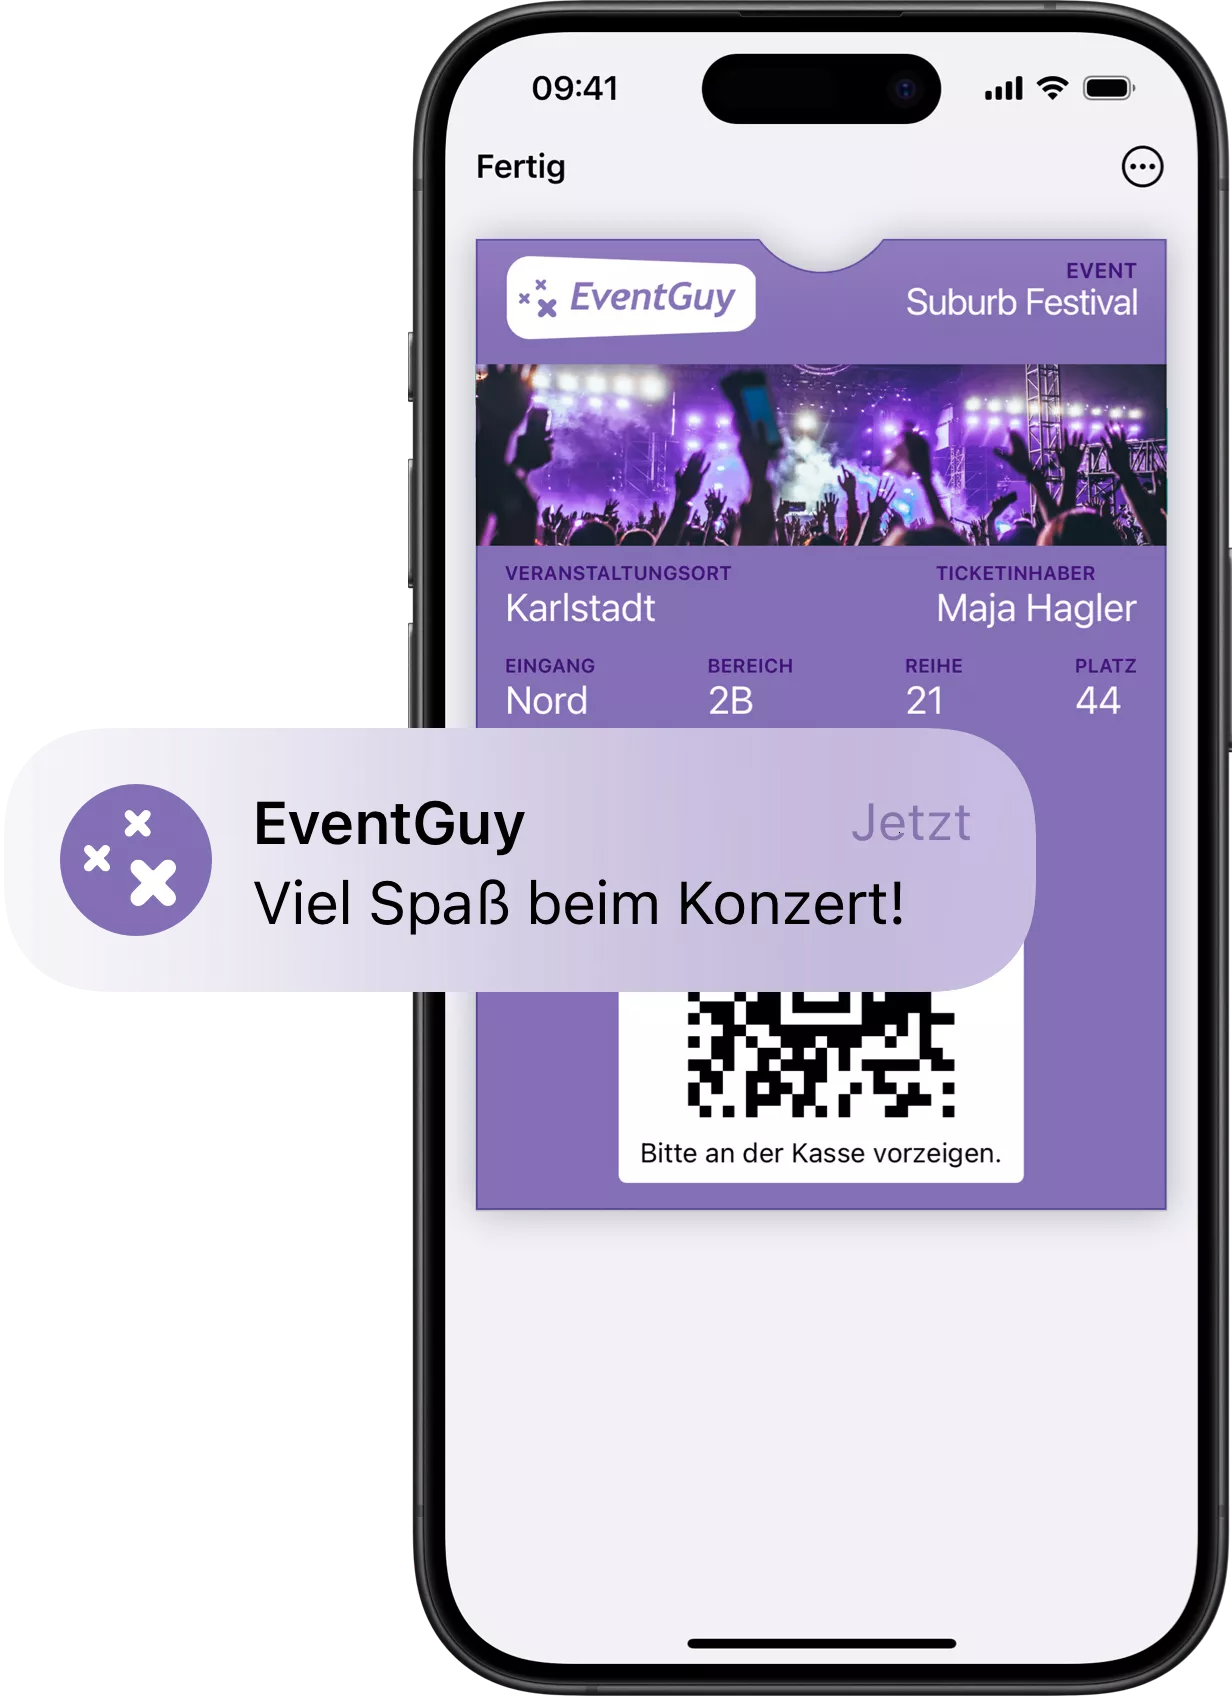 Event ticket example